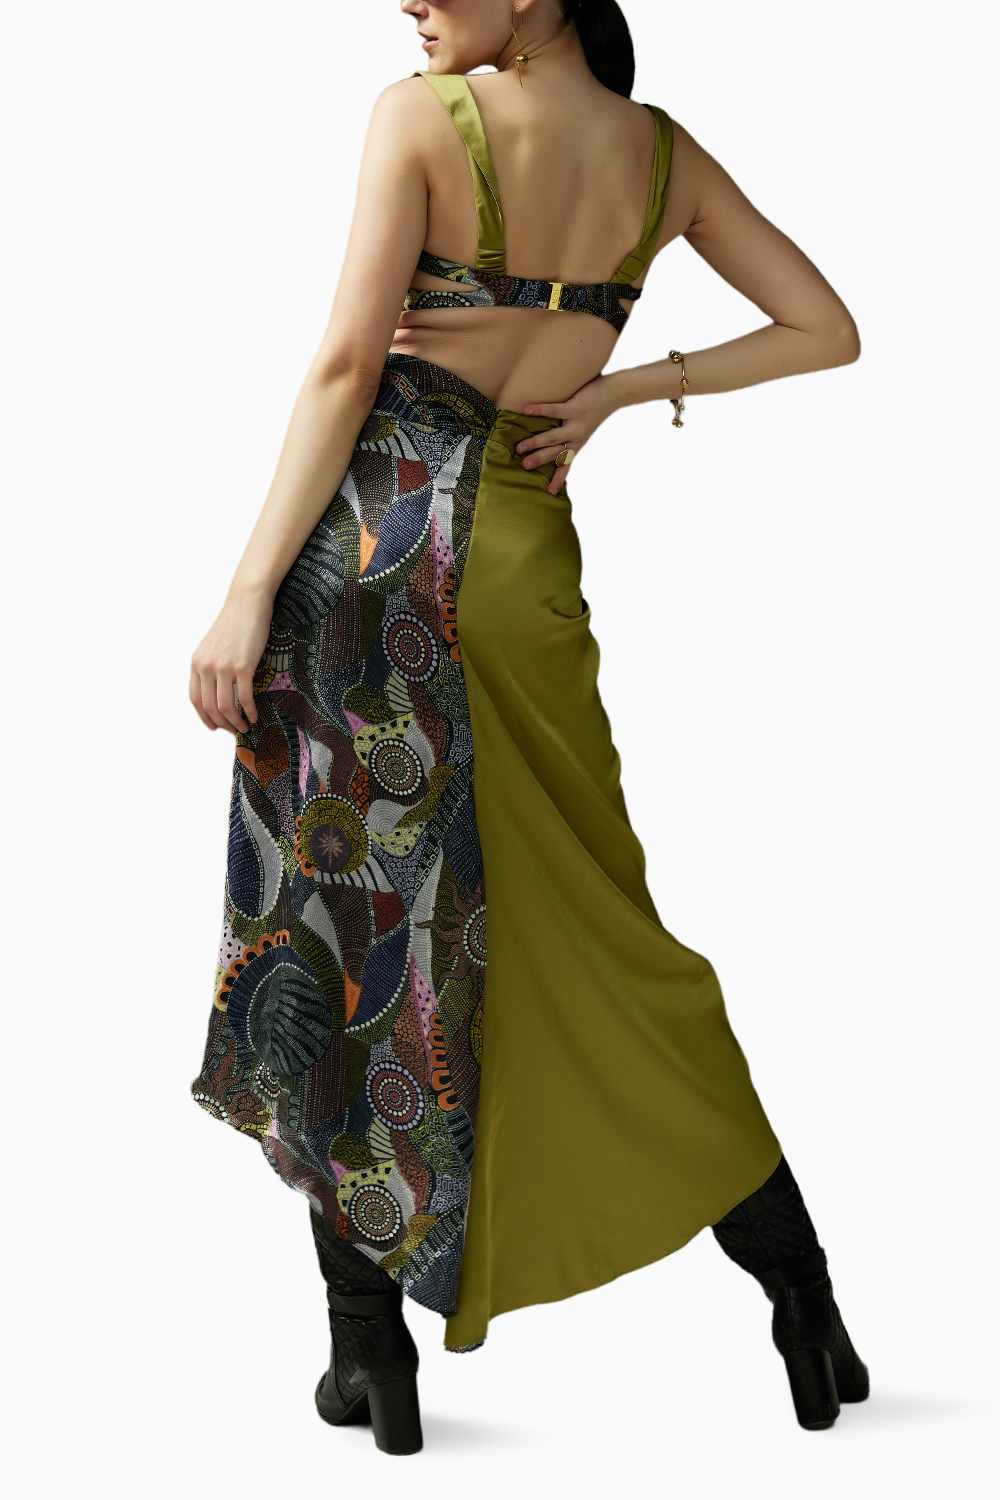 Cassiopeia Horizon Skirt